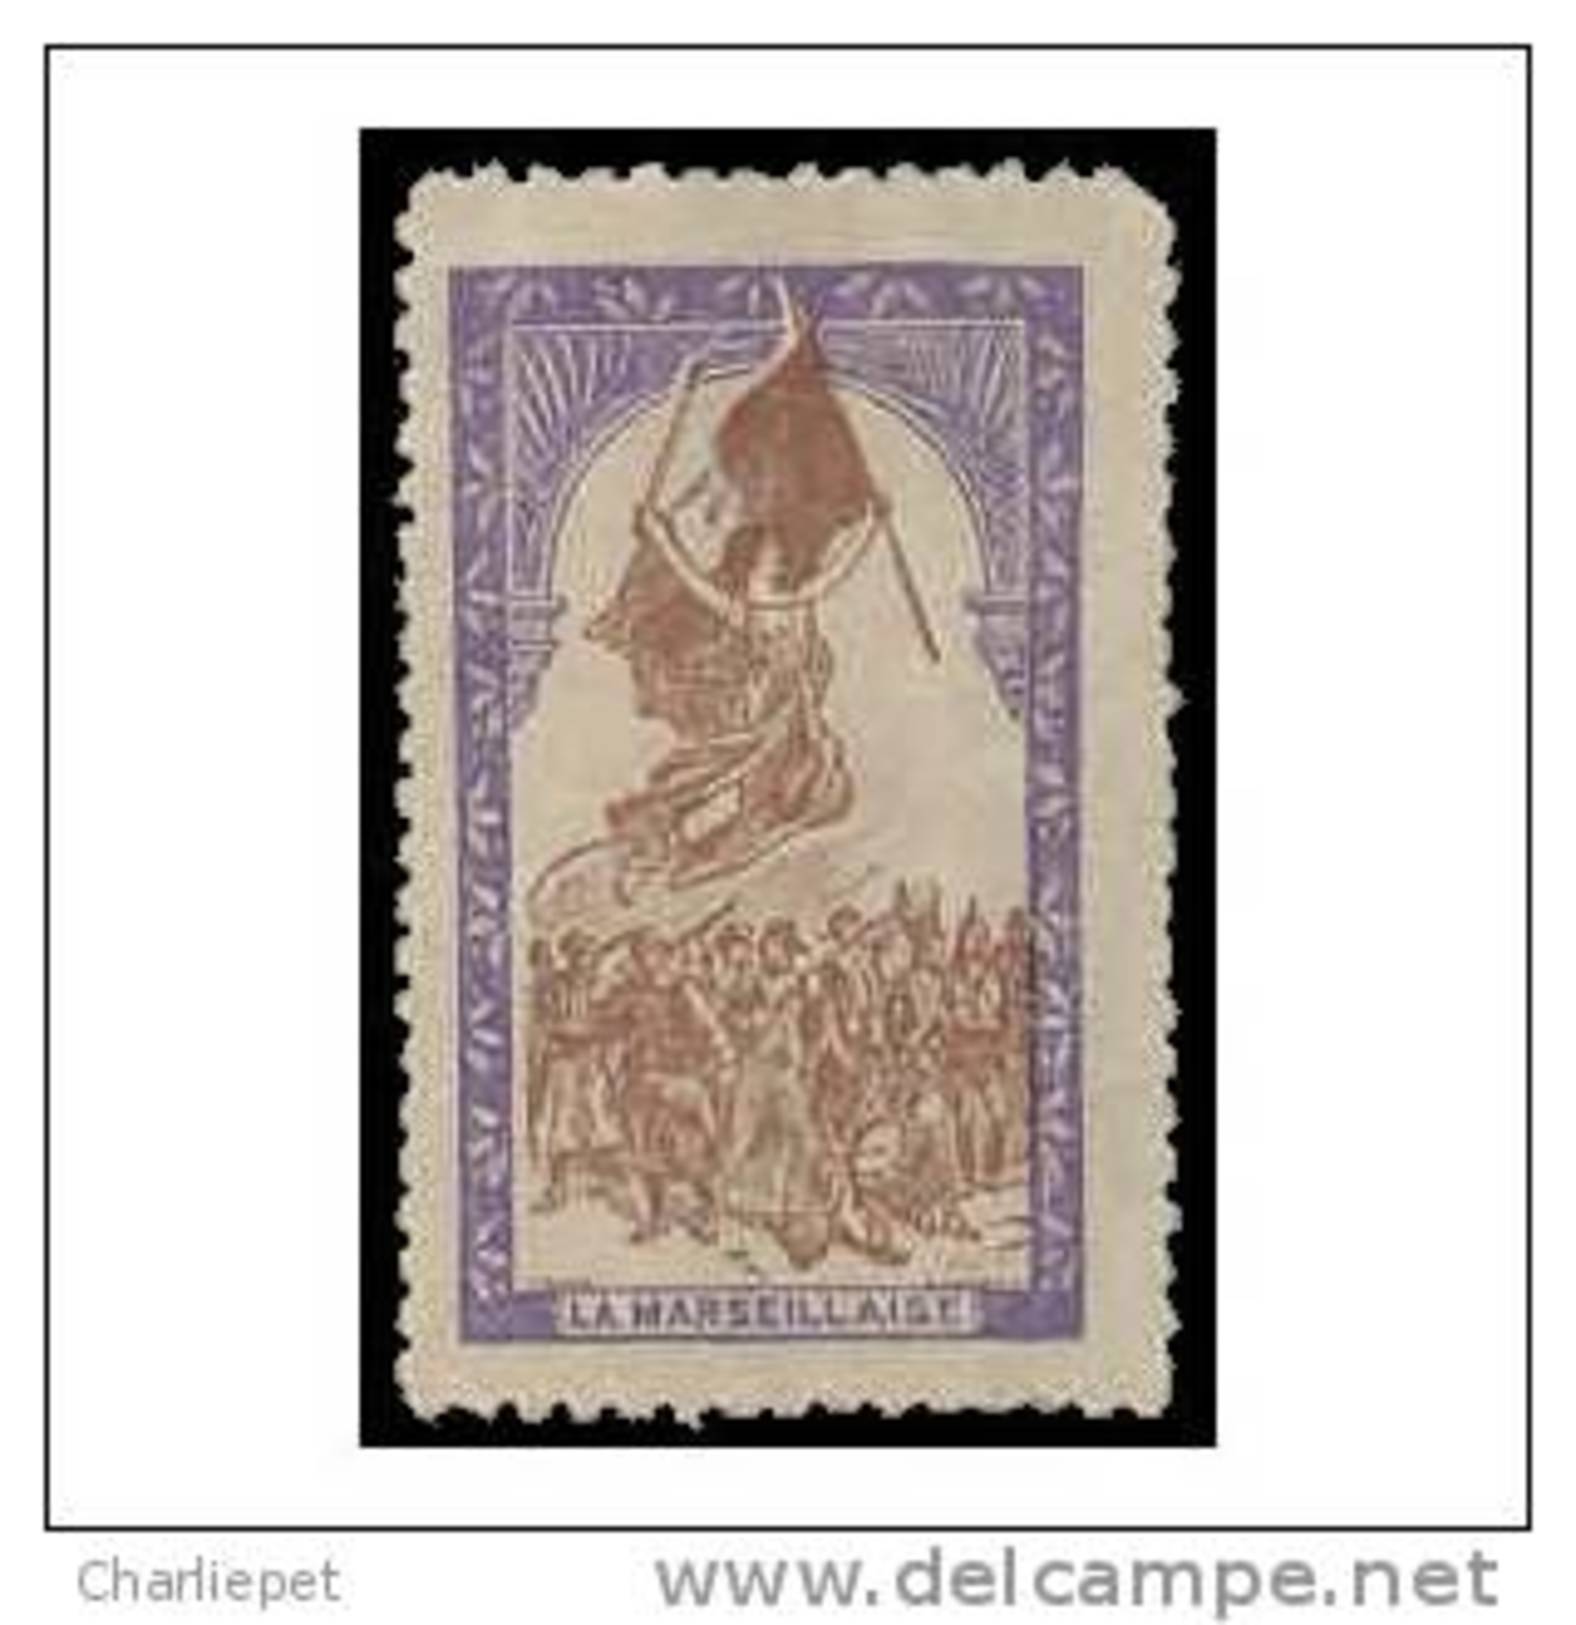 France WWI 1915 La Marseillaise Vignette  Military Heritage Poster Stamp - Philatelic Fairs